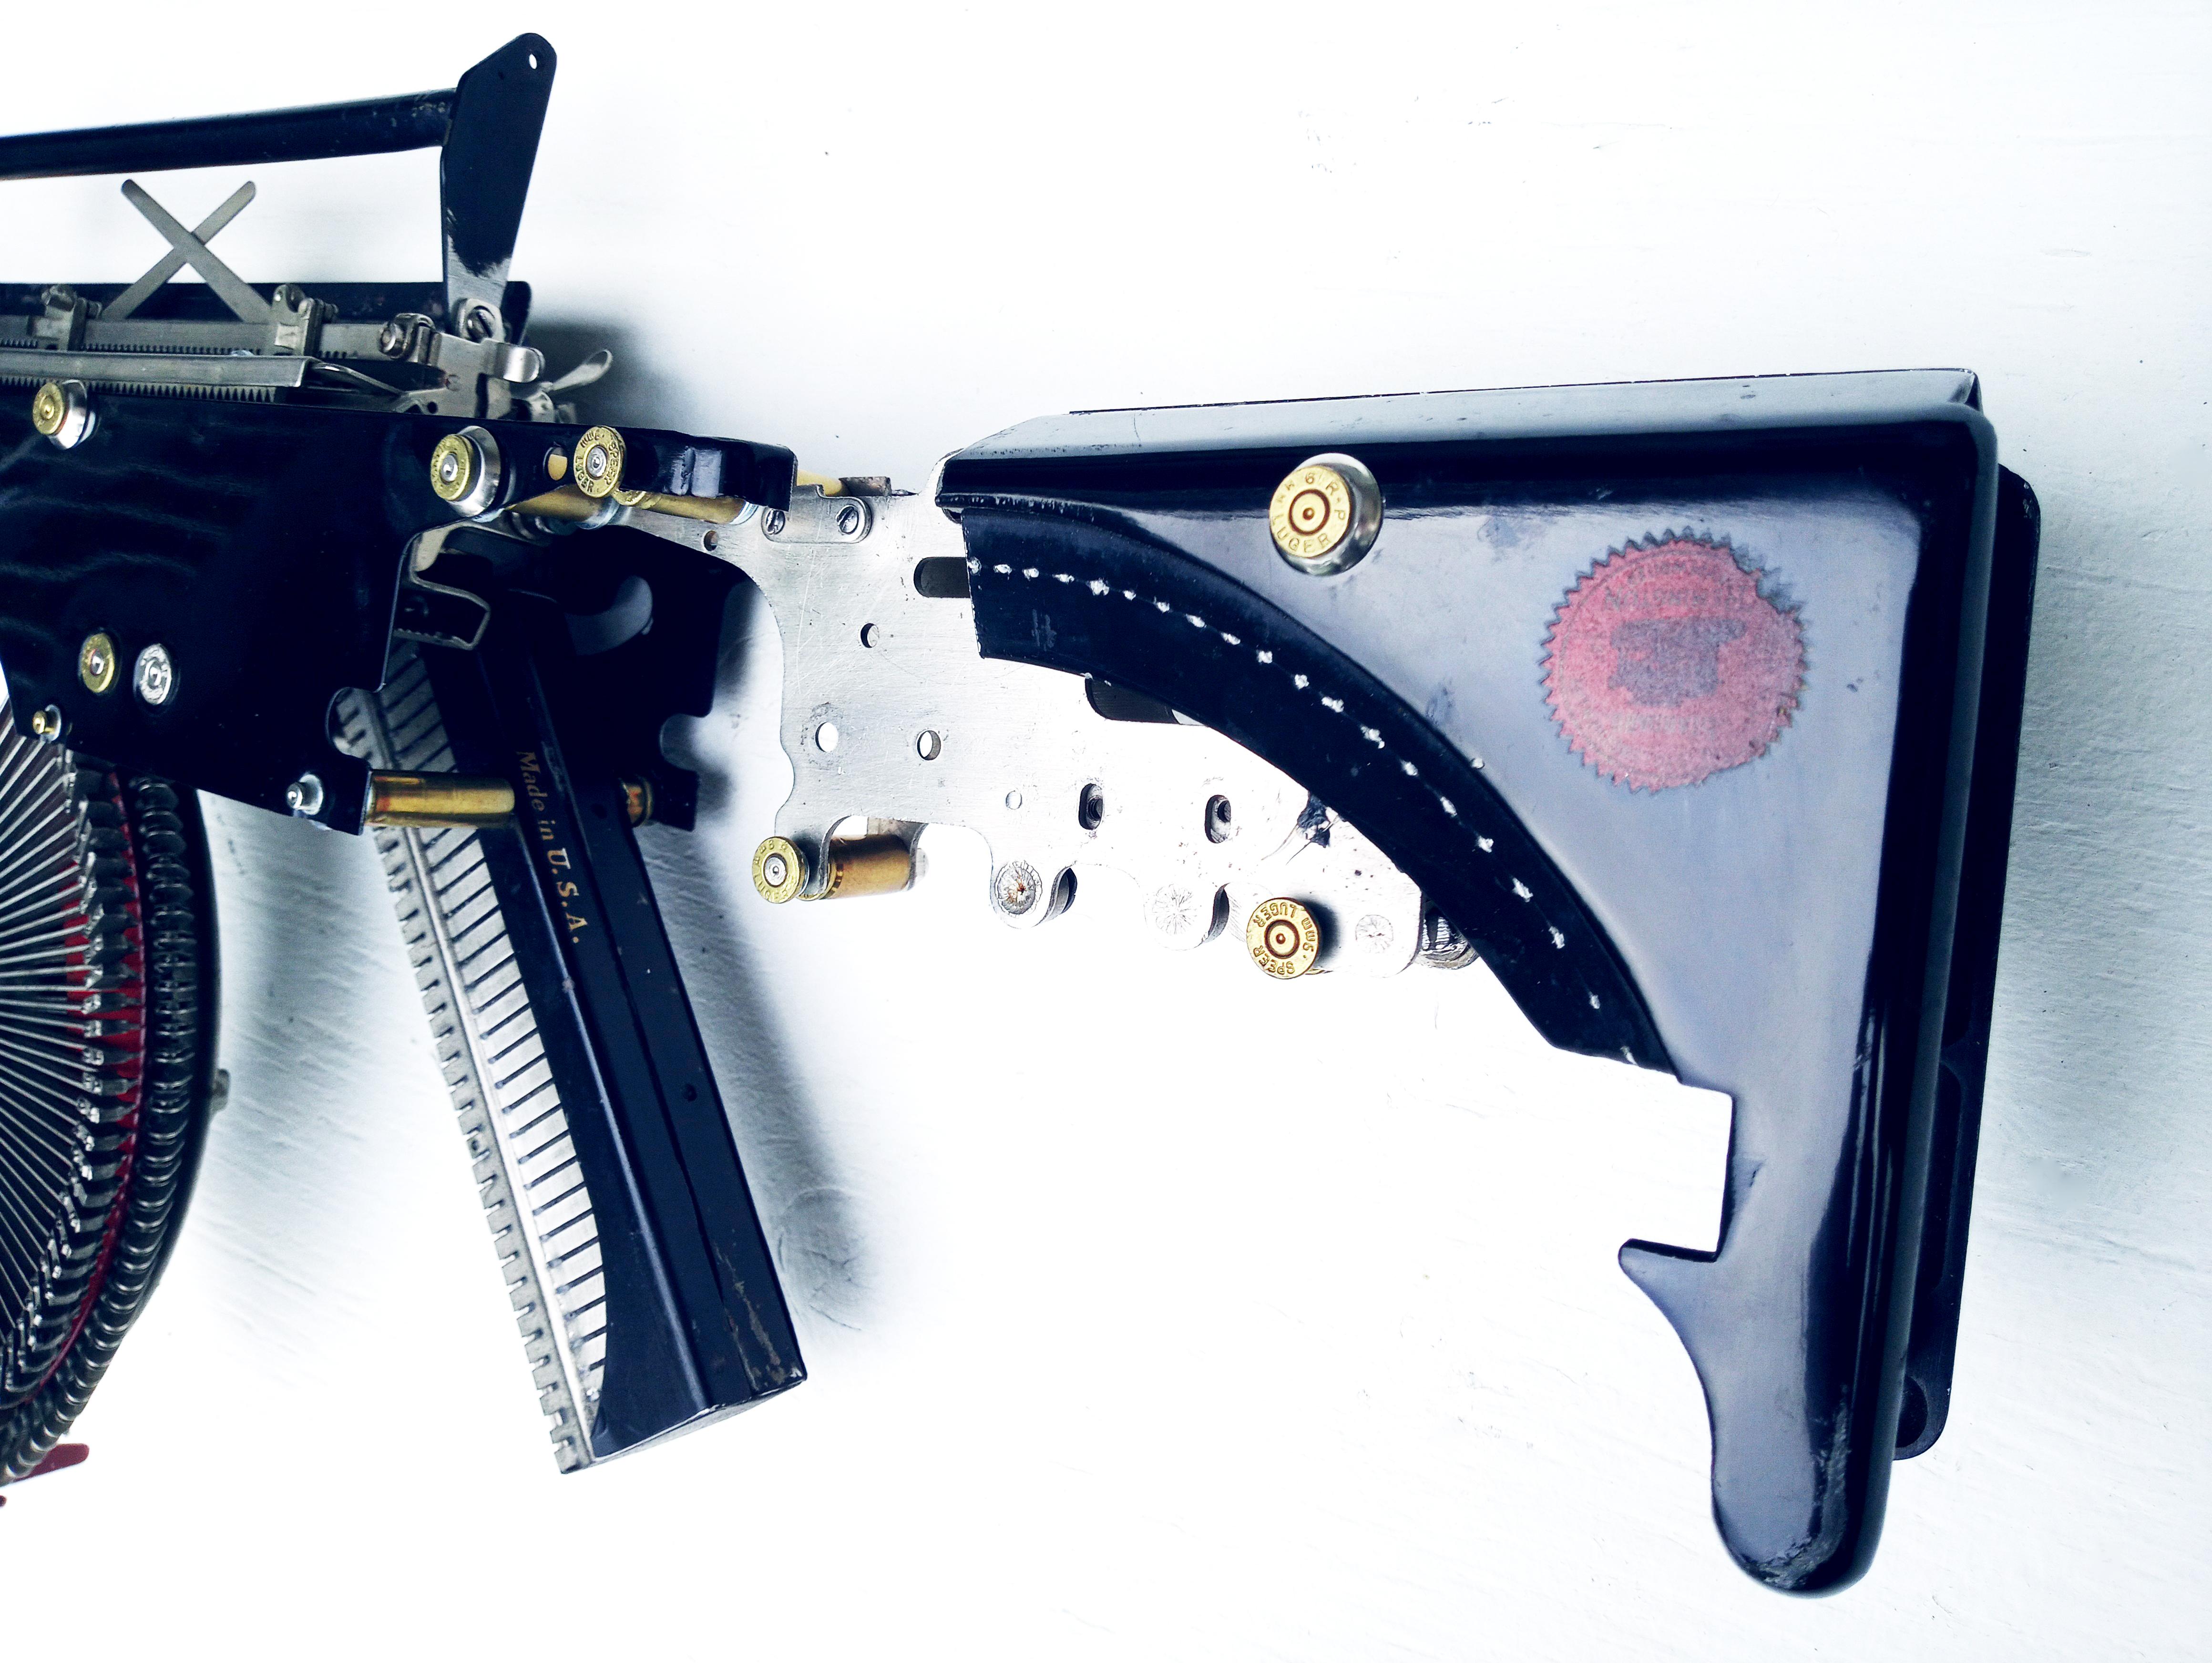 Remington-Trilogy II - black, Vintage Typewriter Machine Gun, wall sculpture  - Contemporary Sculpture by Éric Nado